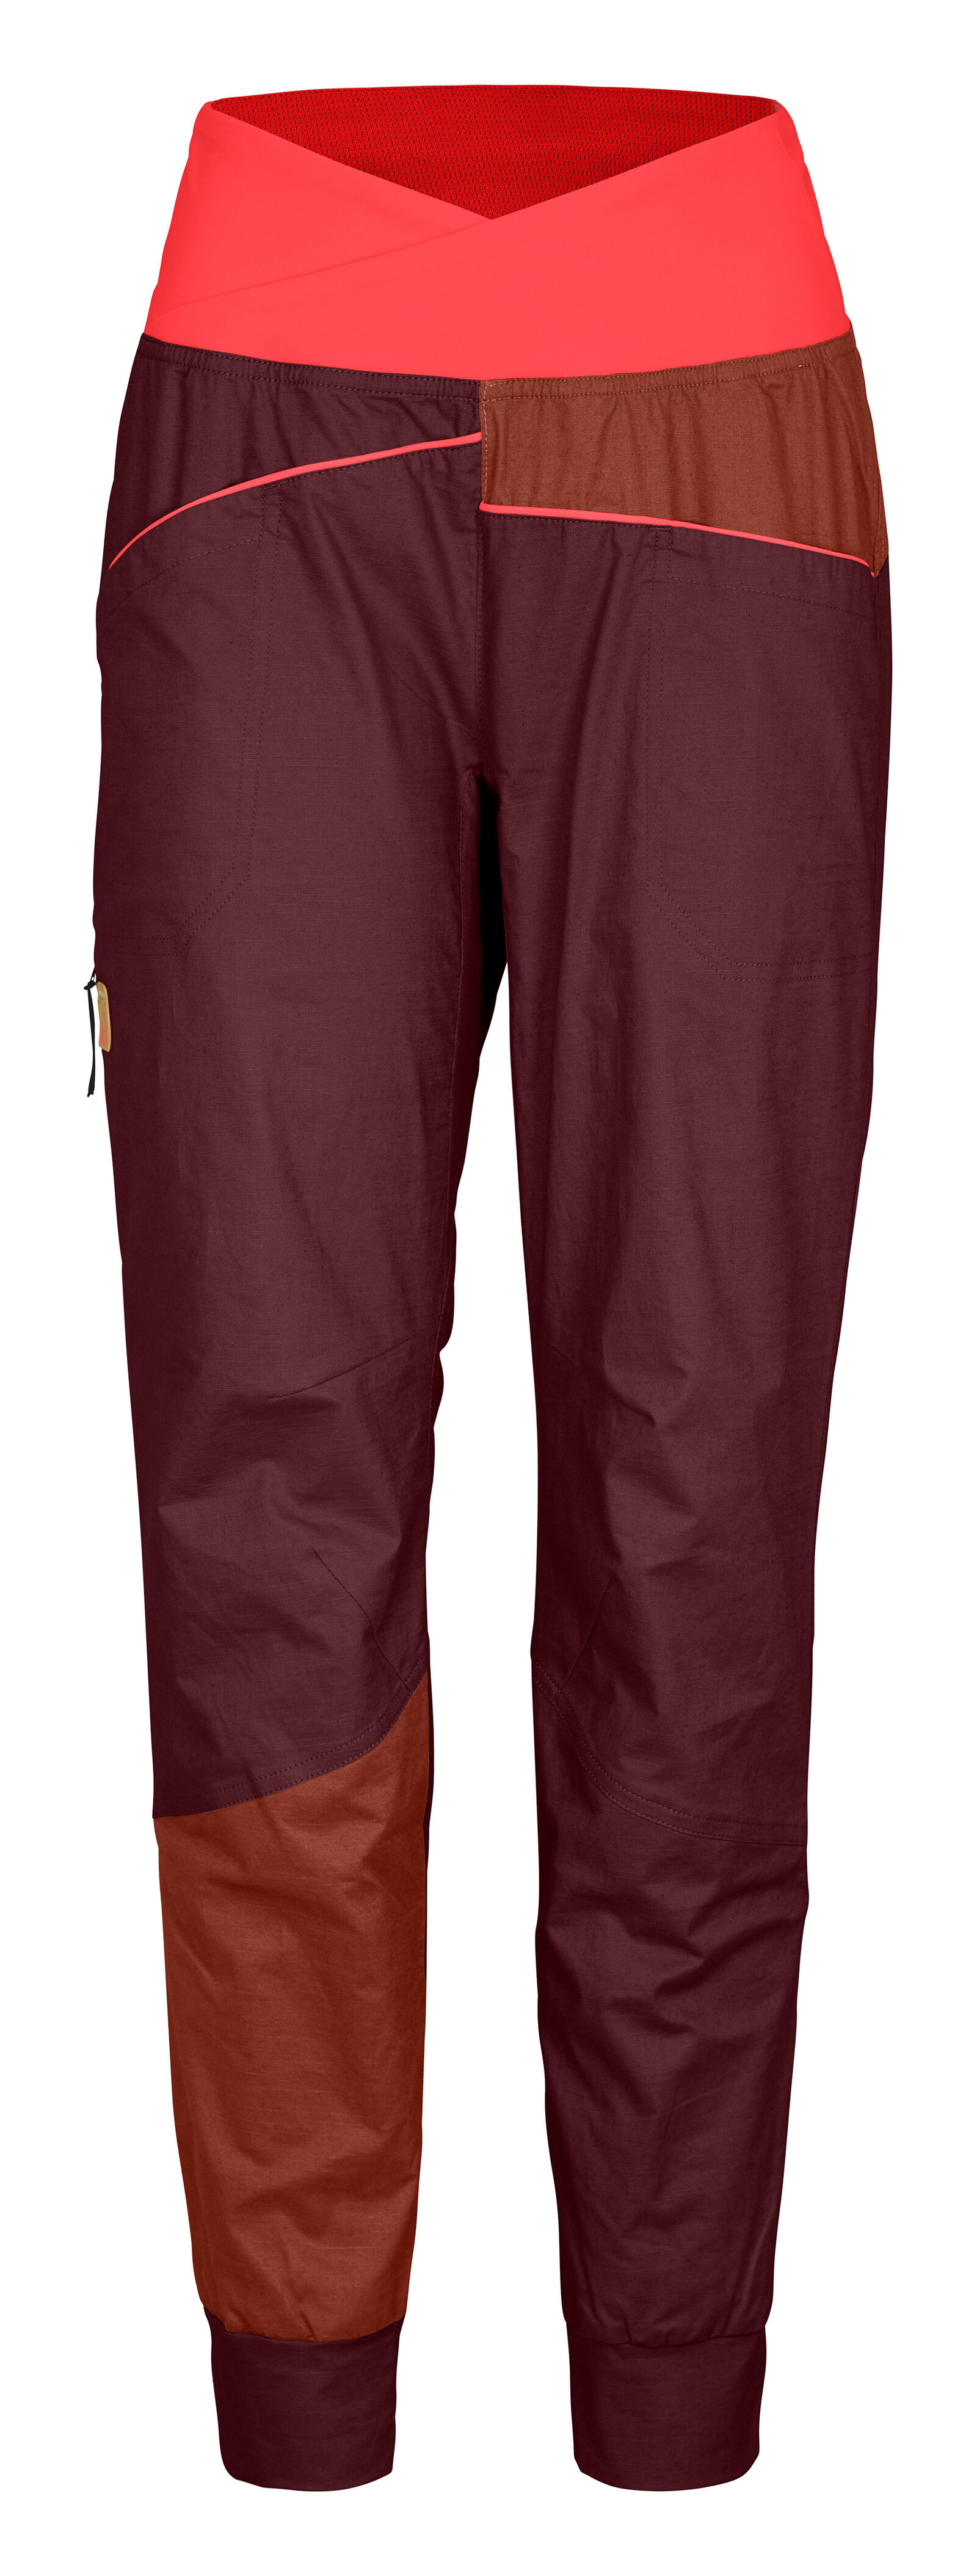 Ortovox Valbon Pants - Climbing trousers - Women's